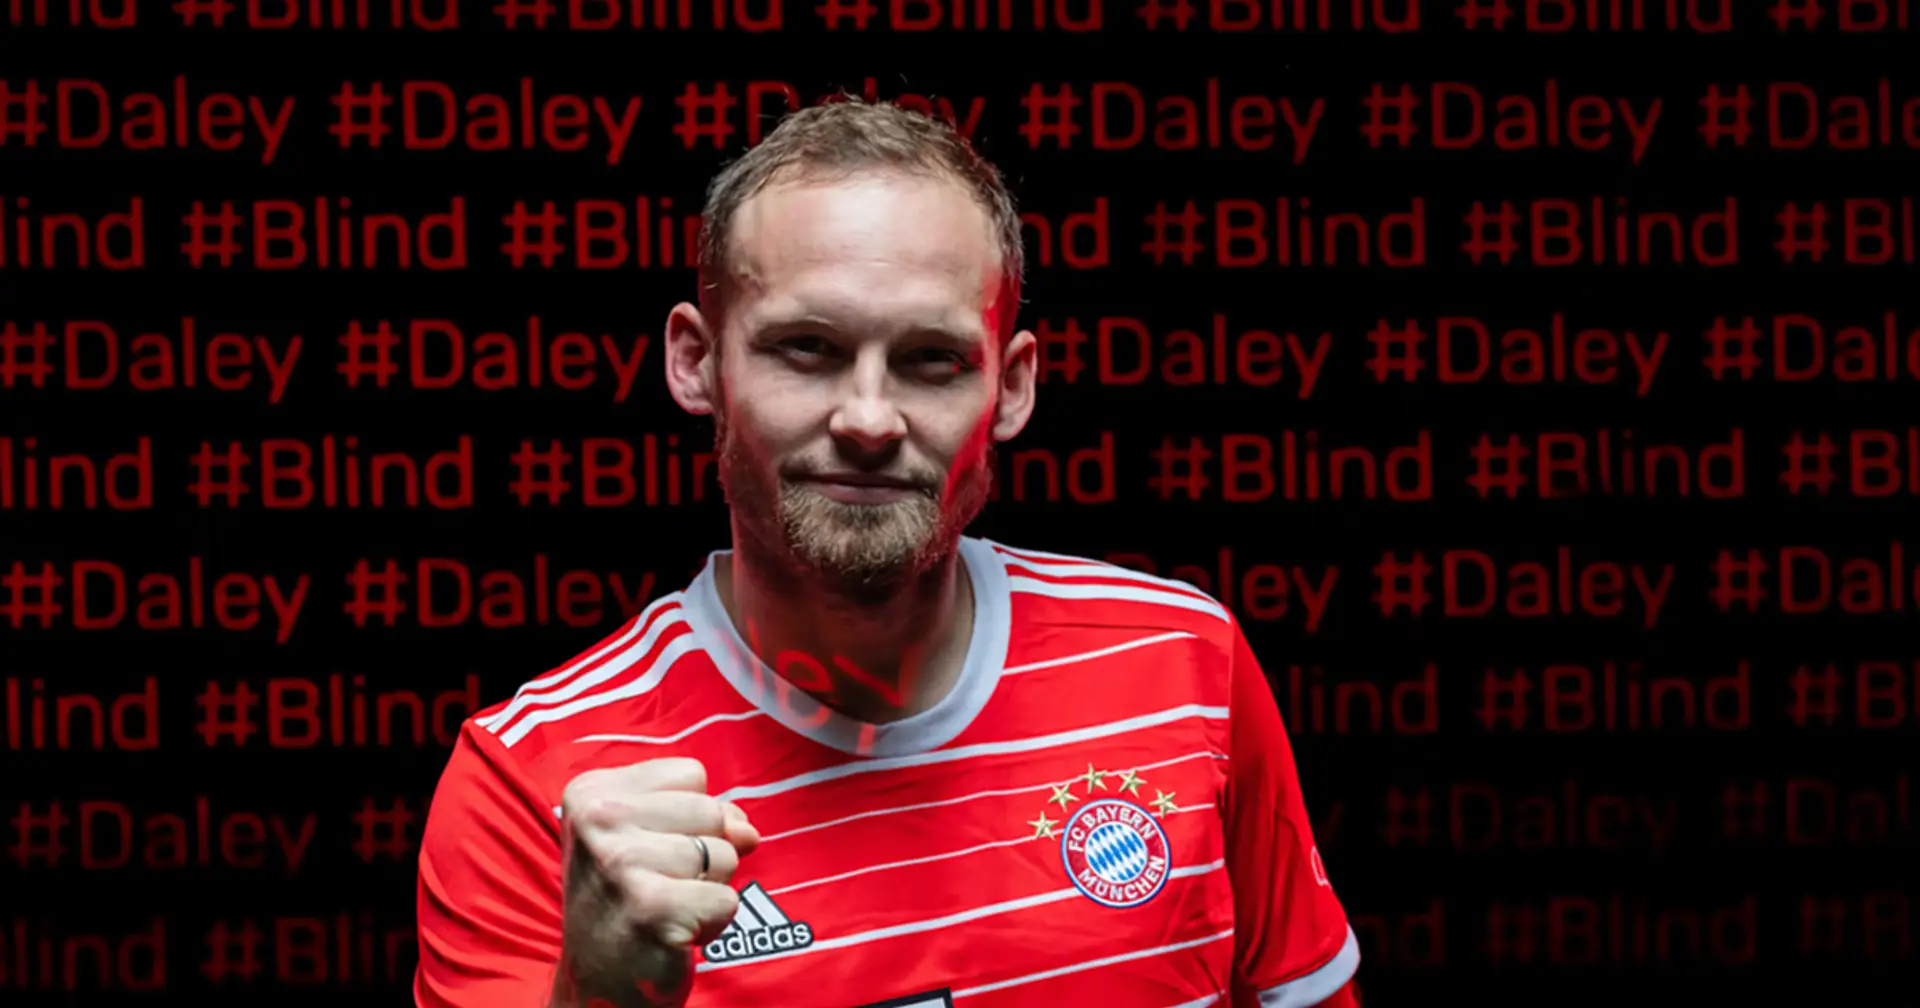 OFFIZIELL: Daley Blind ist Spieler des FC Bayern!